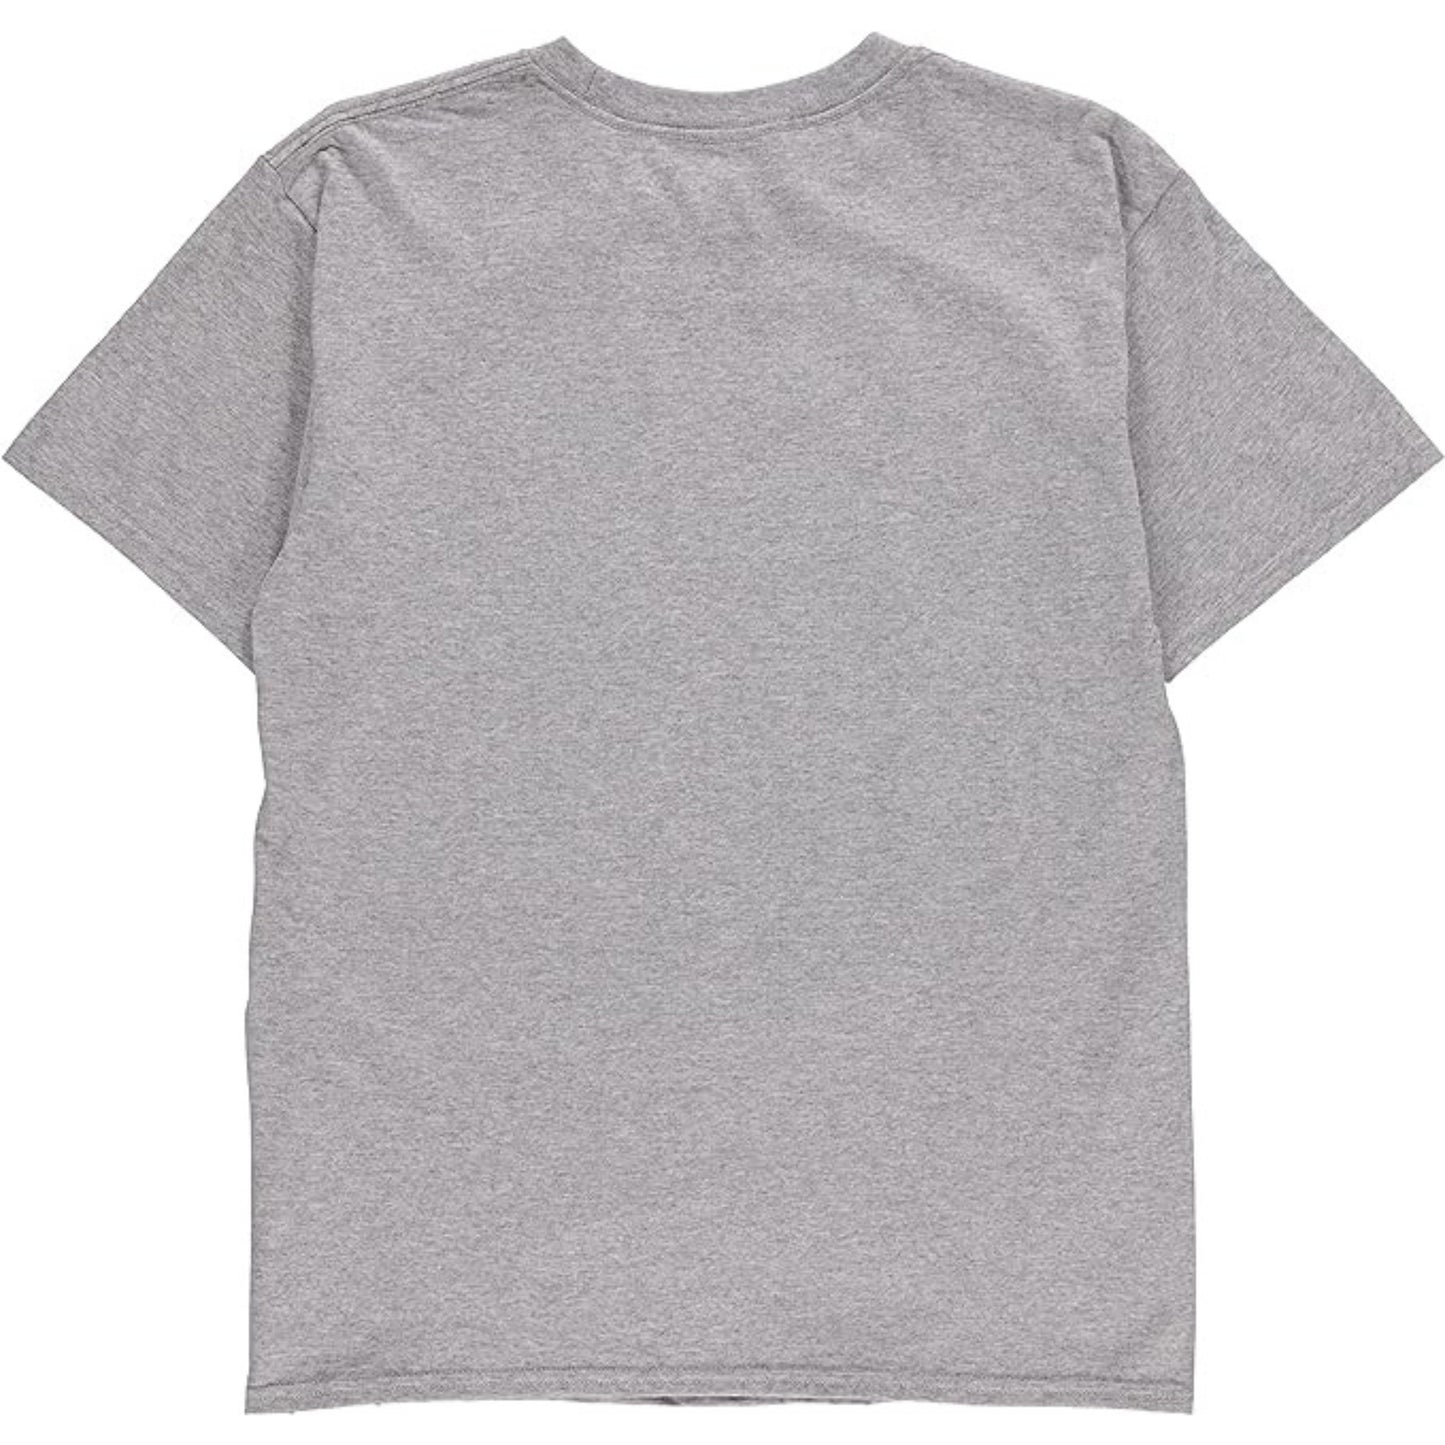 STAR WARS Boys Baby Yoda T-Shirt - Mandalorian The Child Boys Boys Short Sleeve T-Shirt- Air Brushed